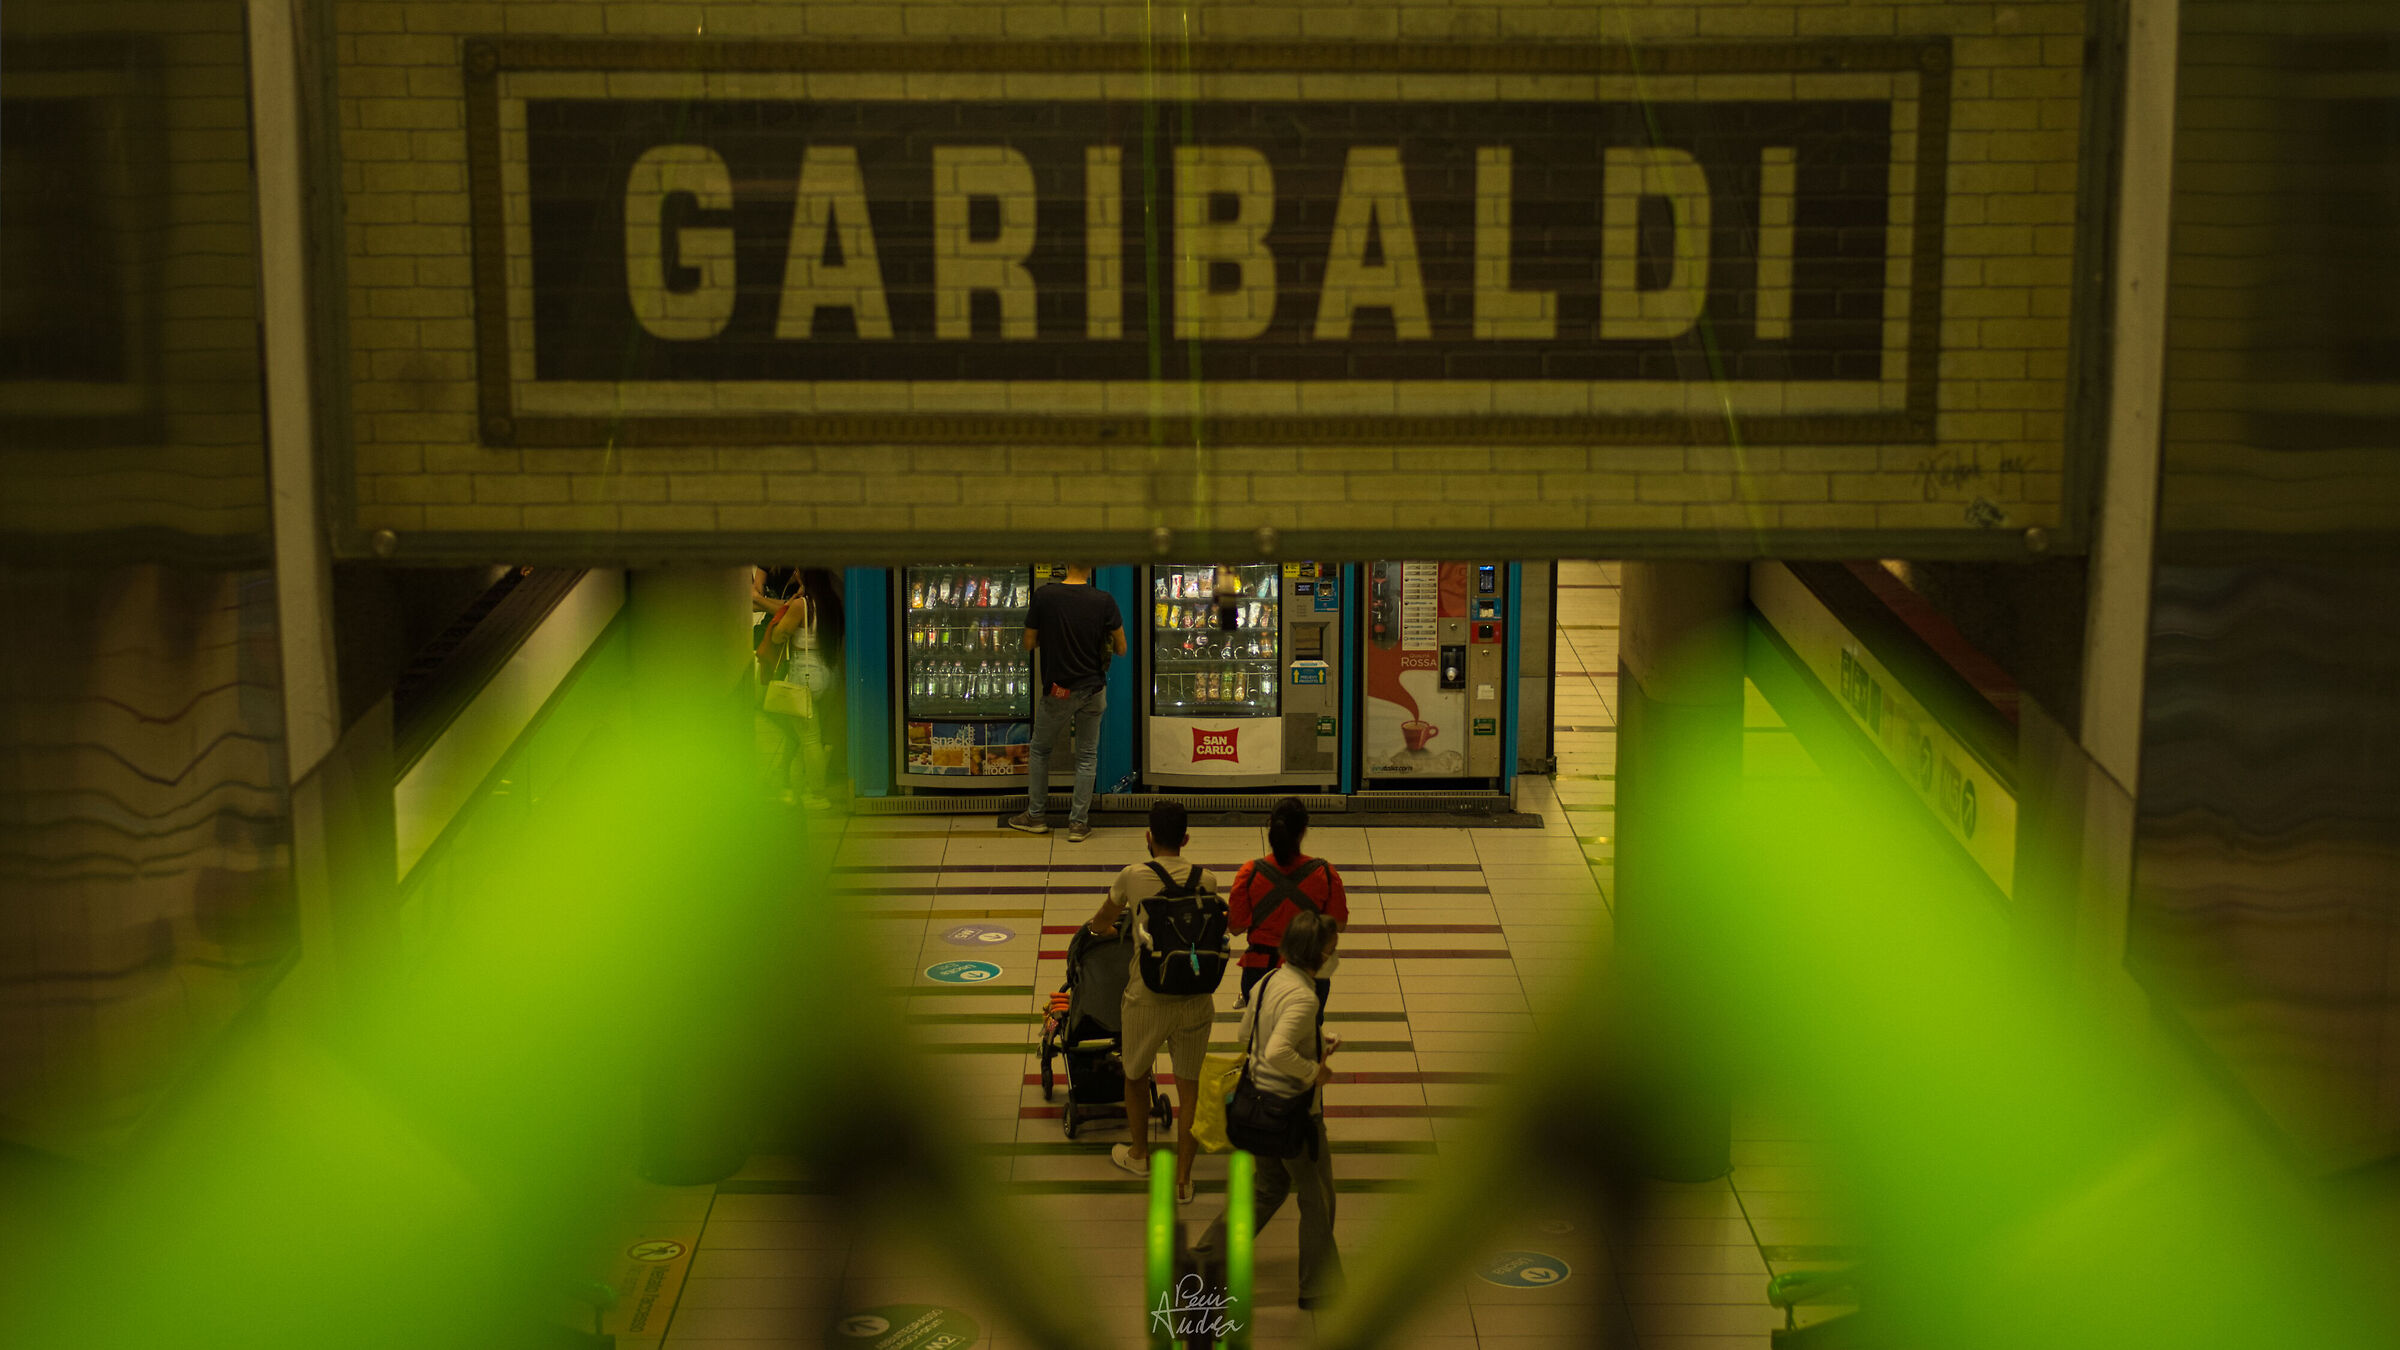 Garibaldi used the metro...